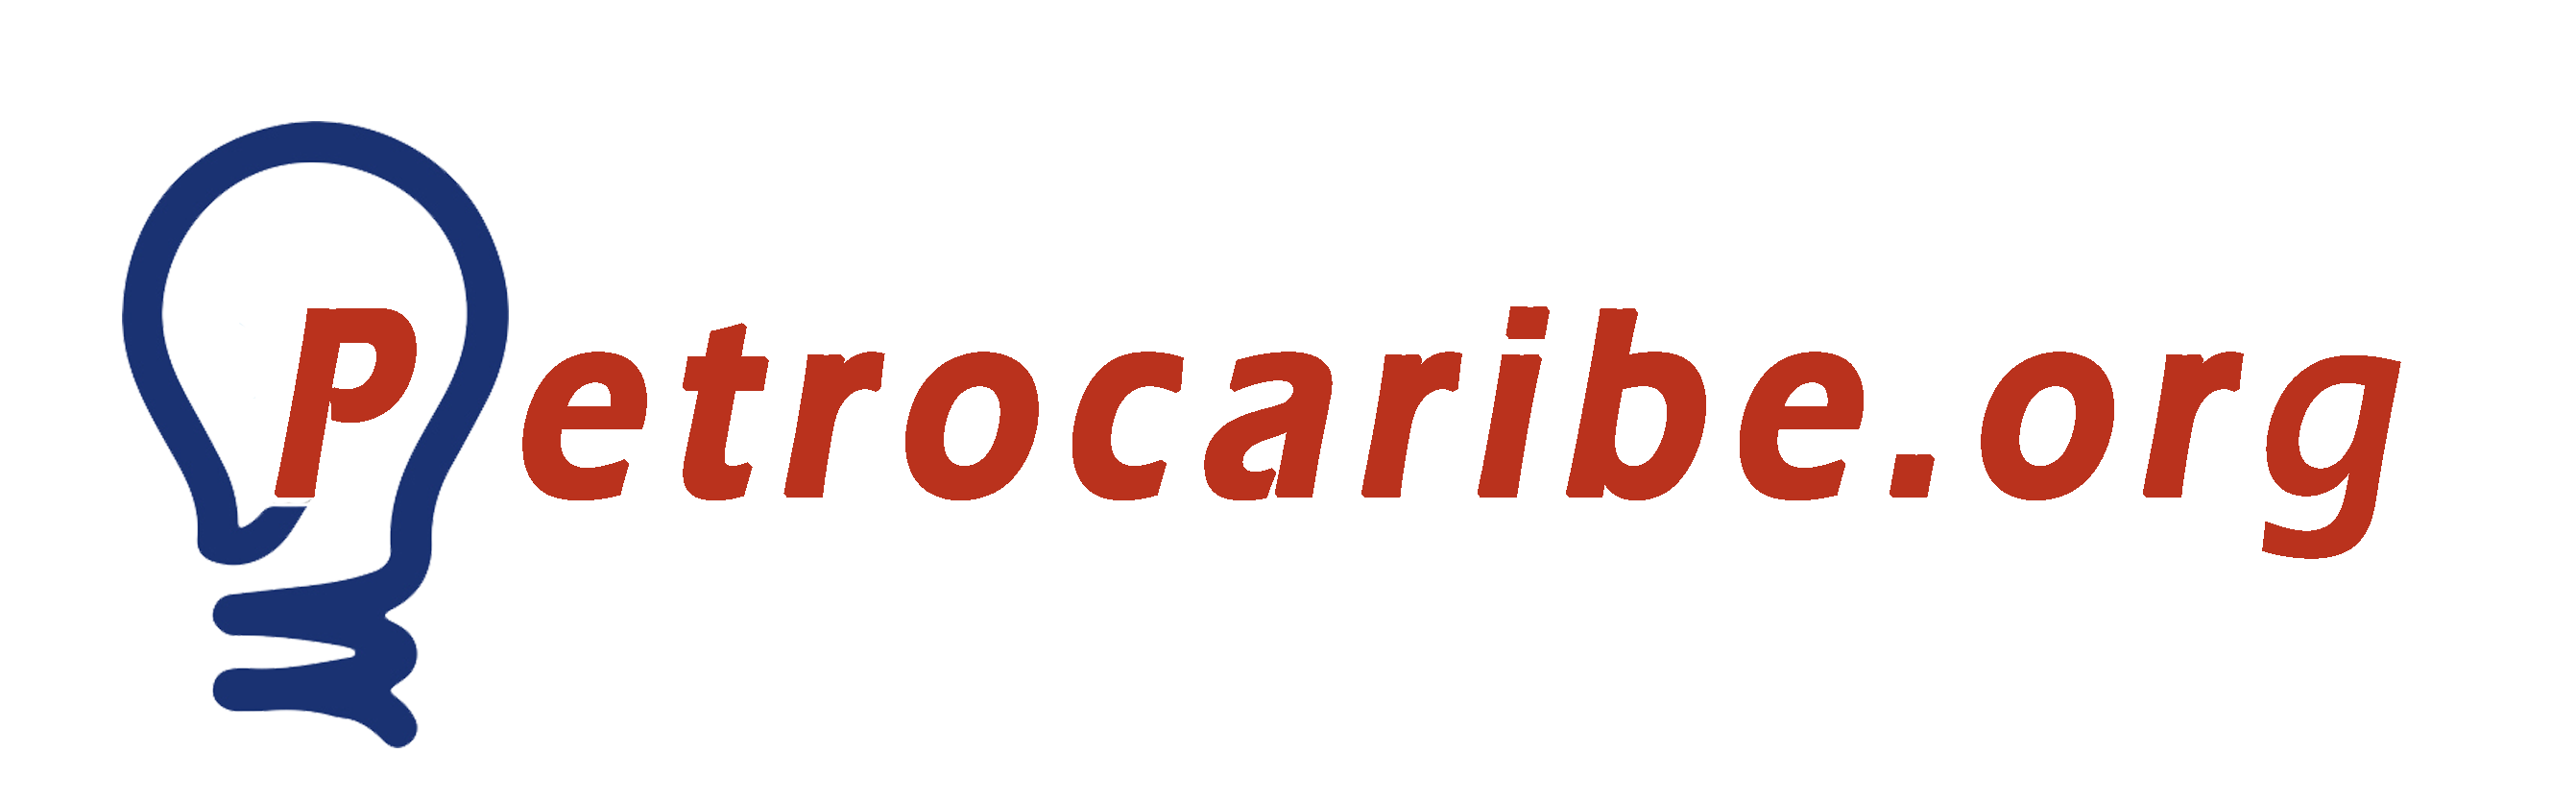 petrocaribe.org